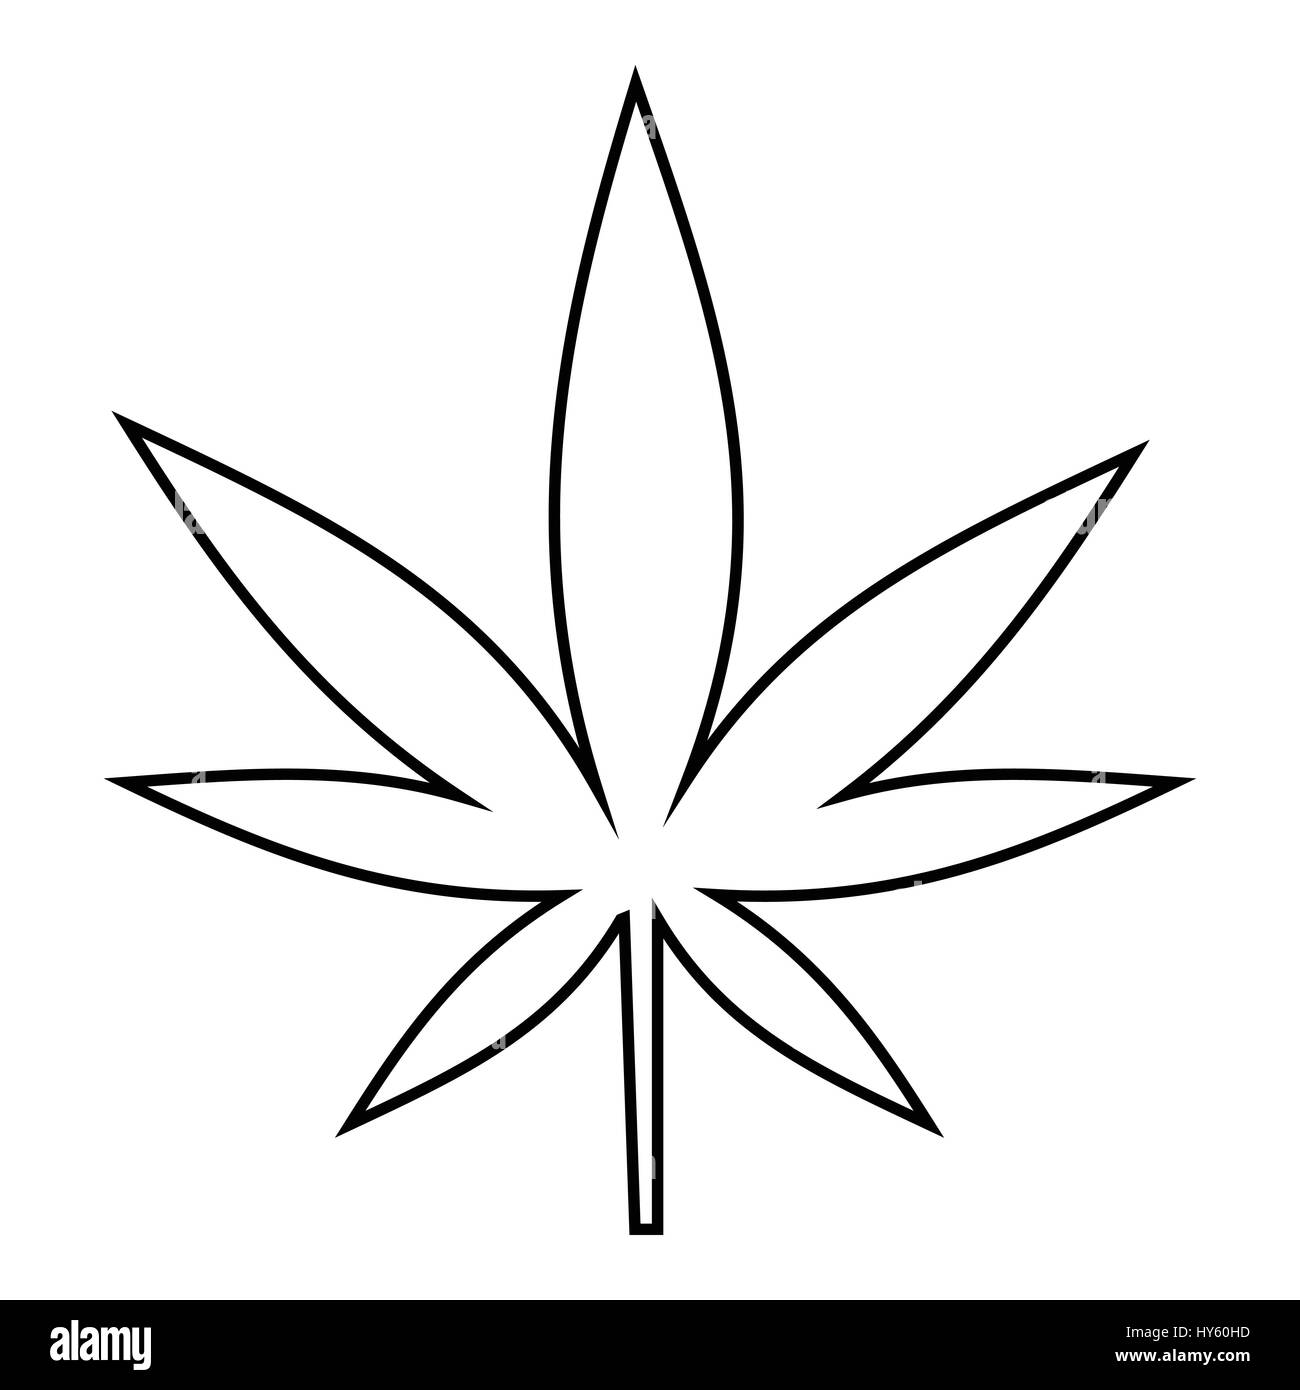 weed symbol drawing